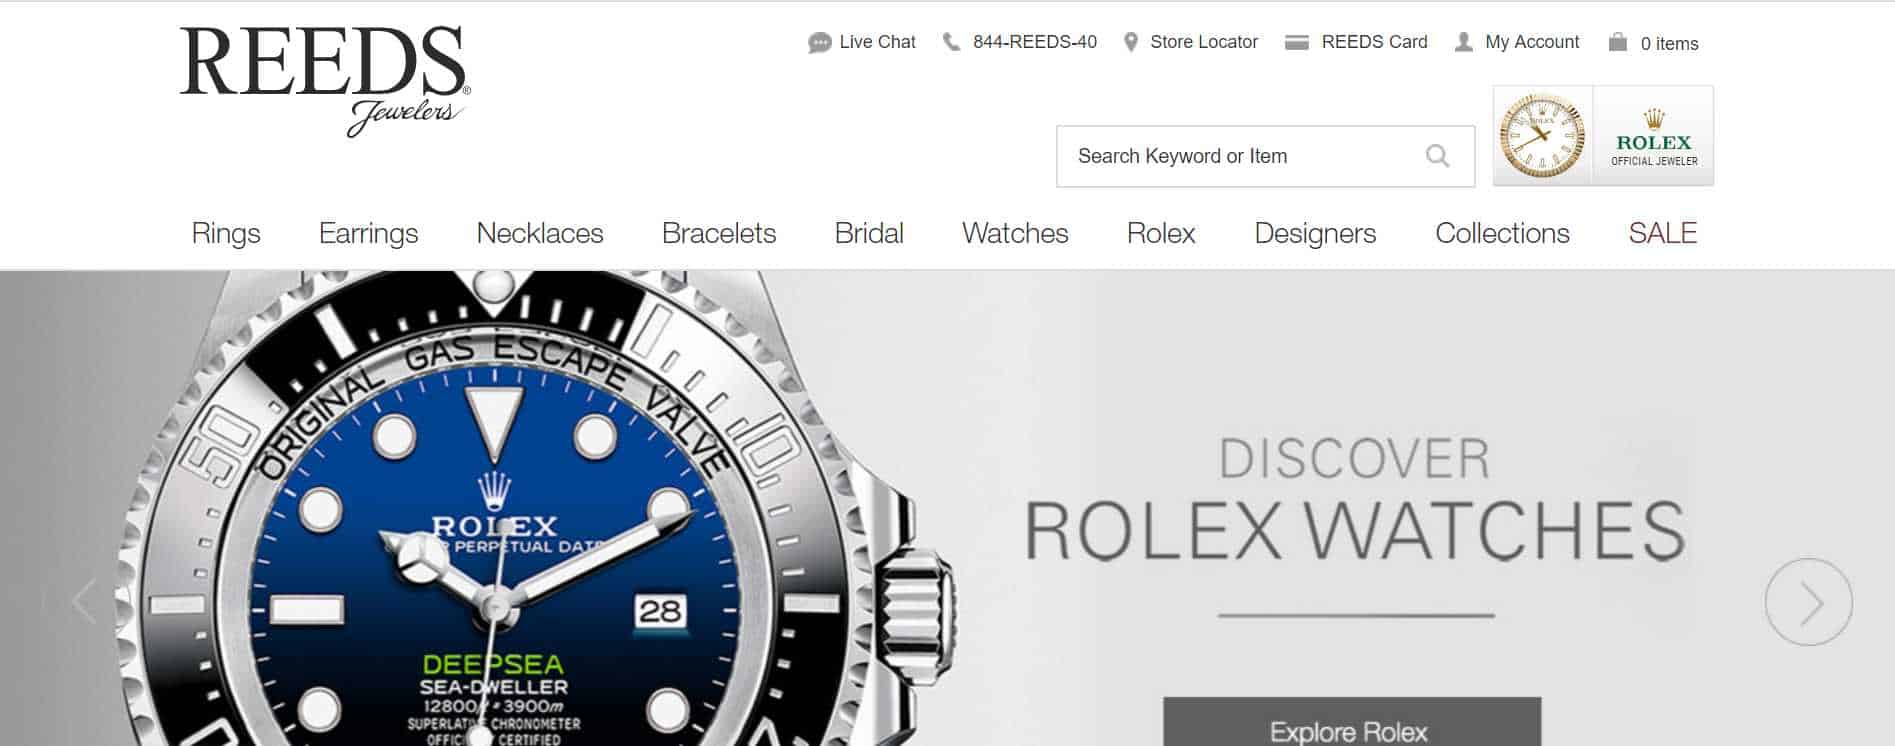 reeds luxury watches online